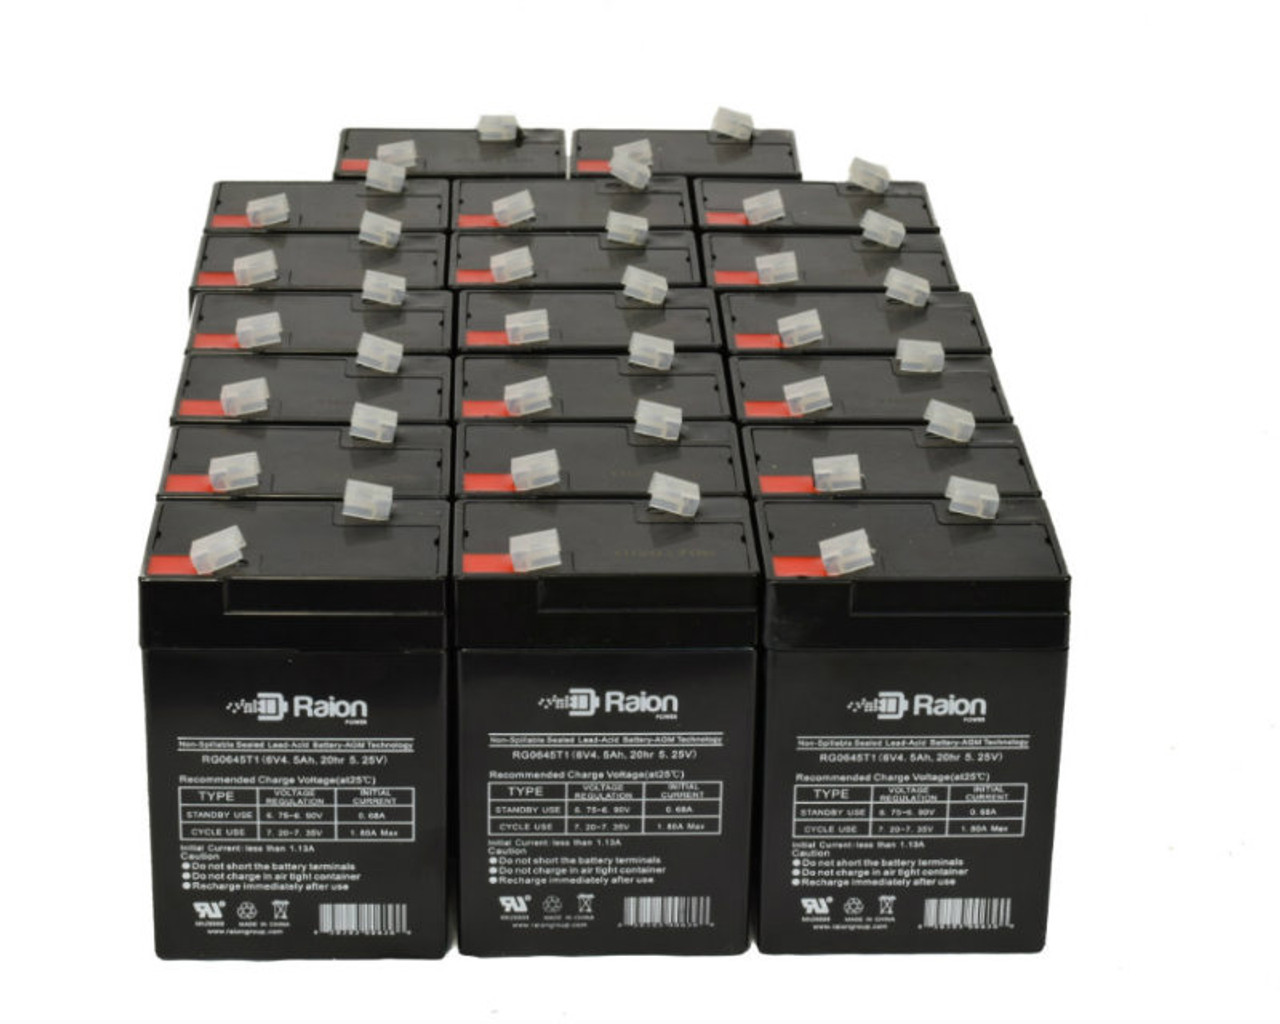 Raion Power 6V 4.5Ah Replacement Emergency Light Battery for Light Alarms 2DM3 - 20 Pack